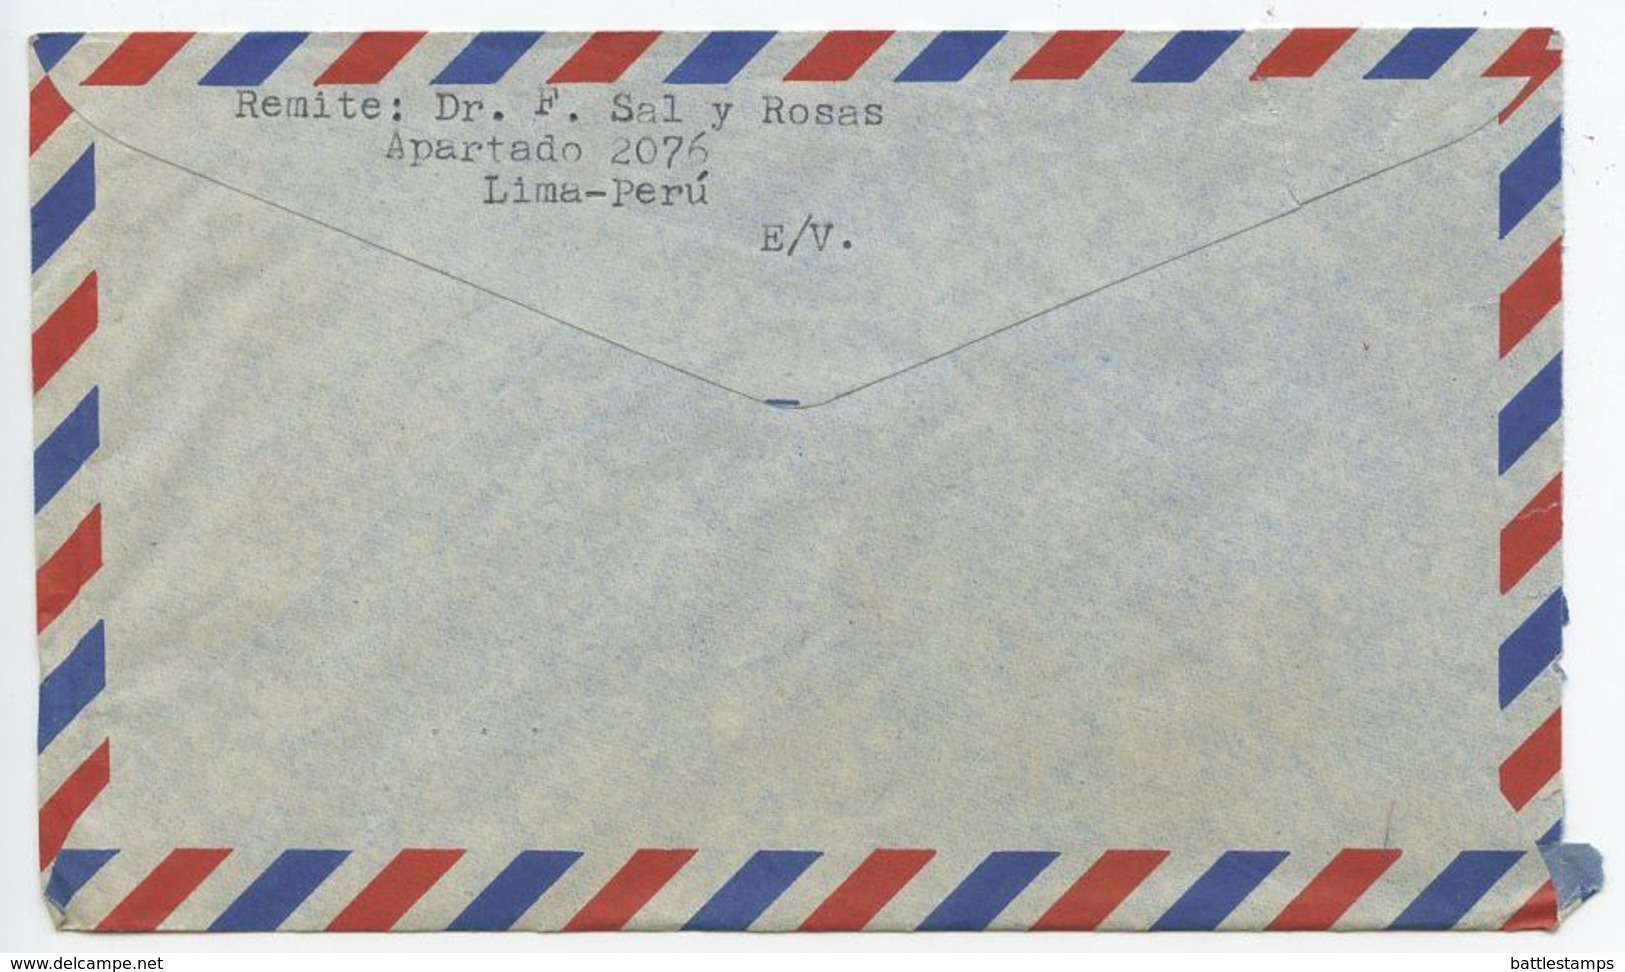 Peru 1957 Airmail Cover Lima To Ann Arbor Michigan, Scott C117 Airport - Perú